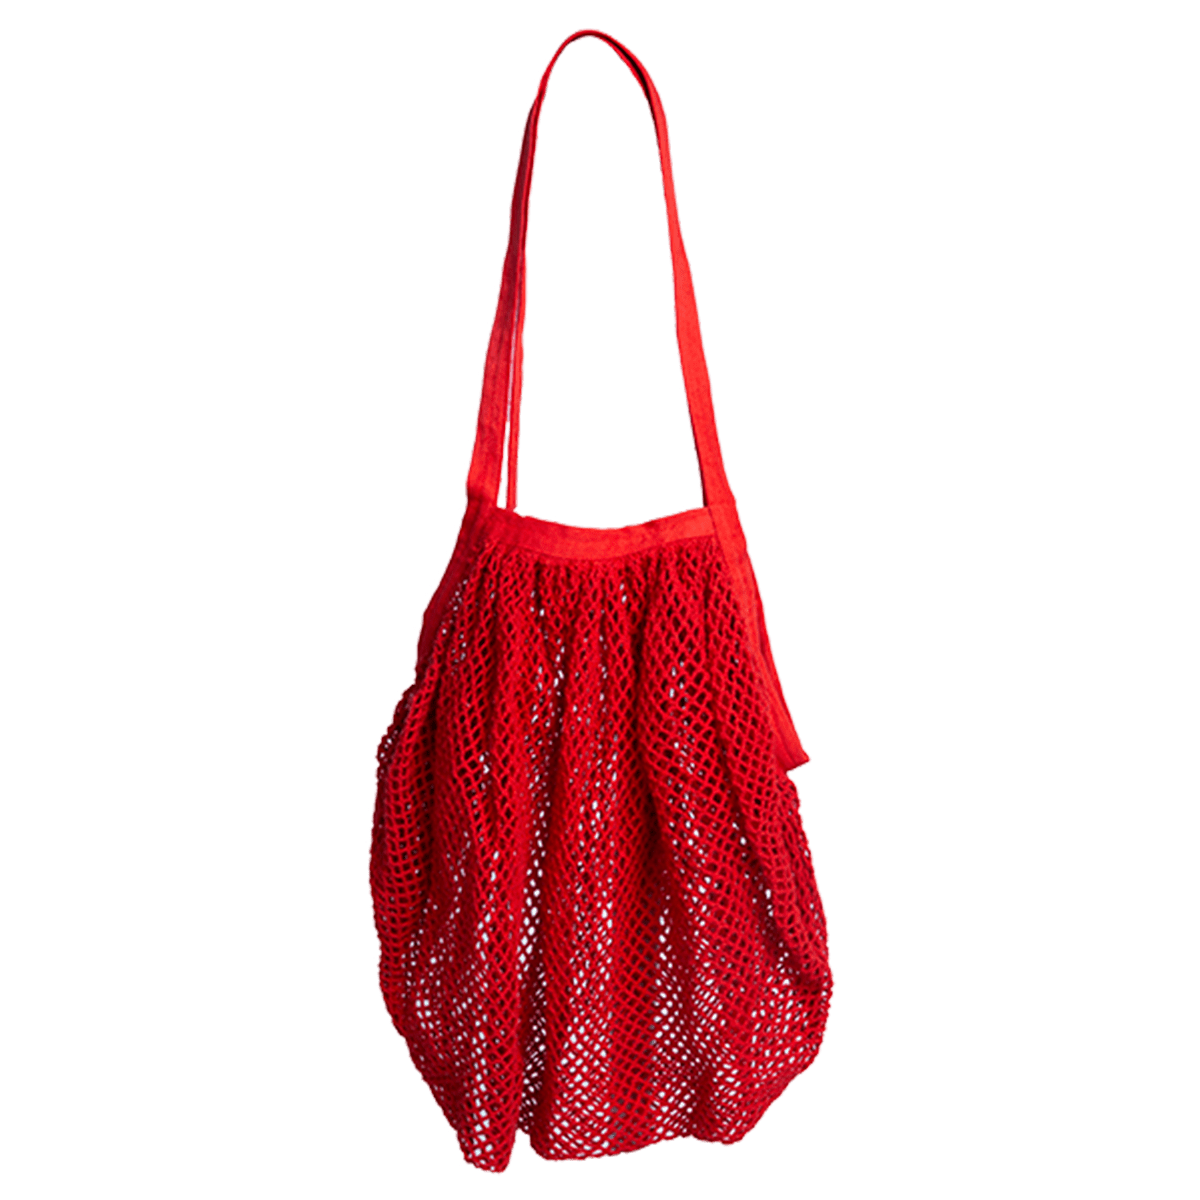 Net bag red - Kitsch